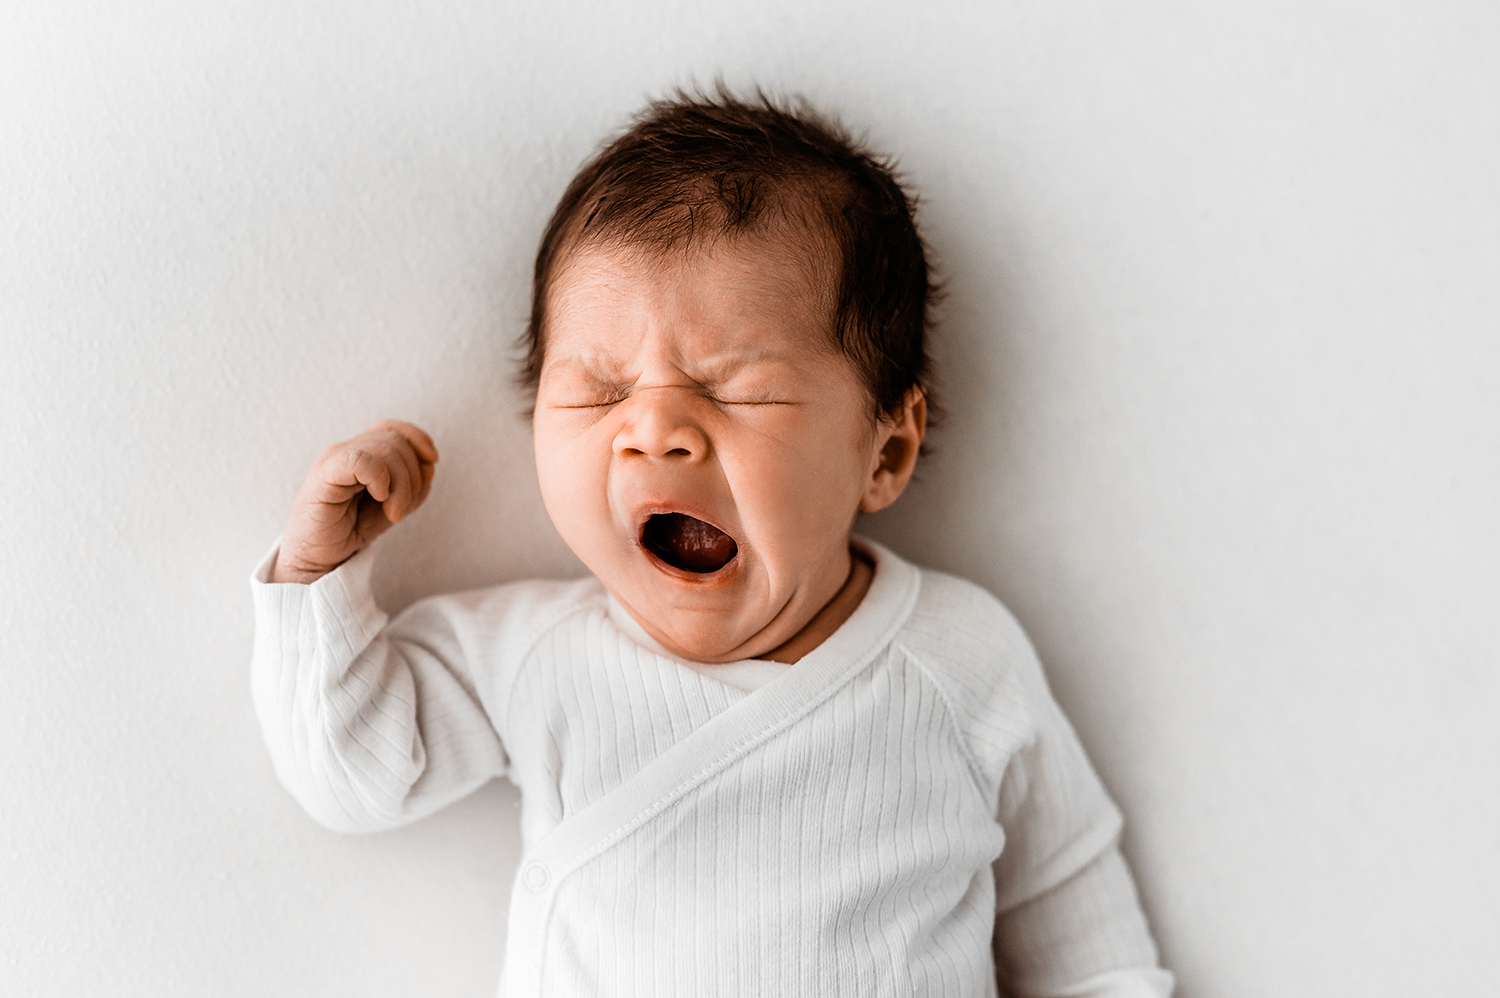 baby yawn at newborn session in Barnsley photography studio